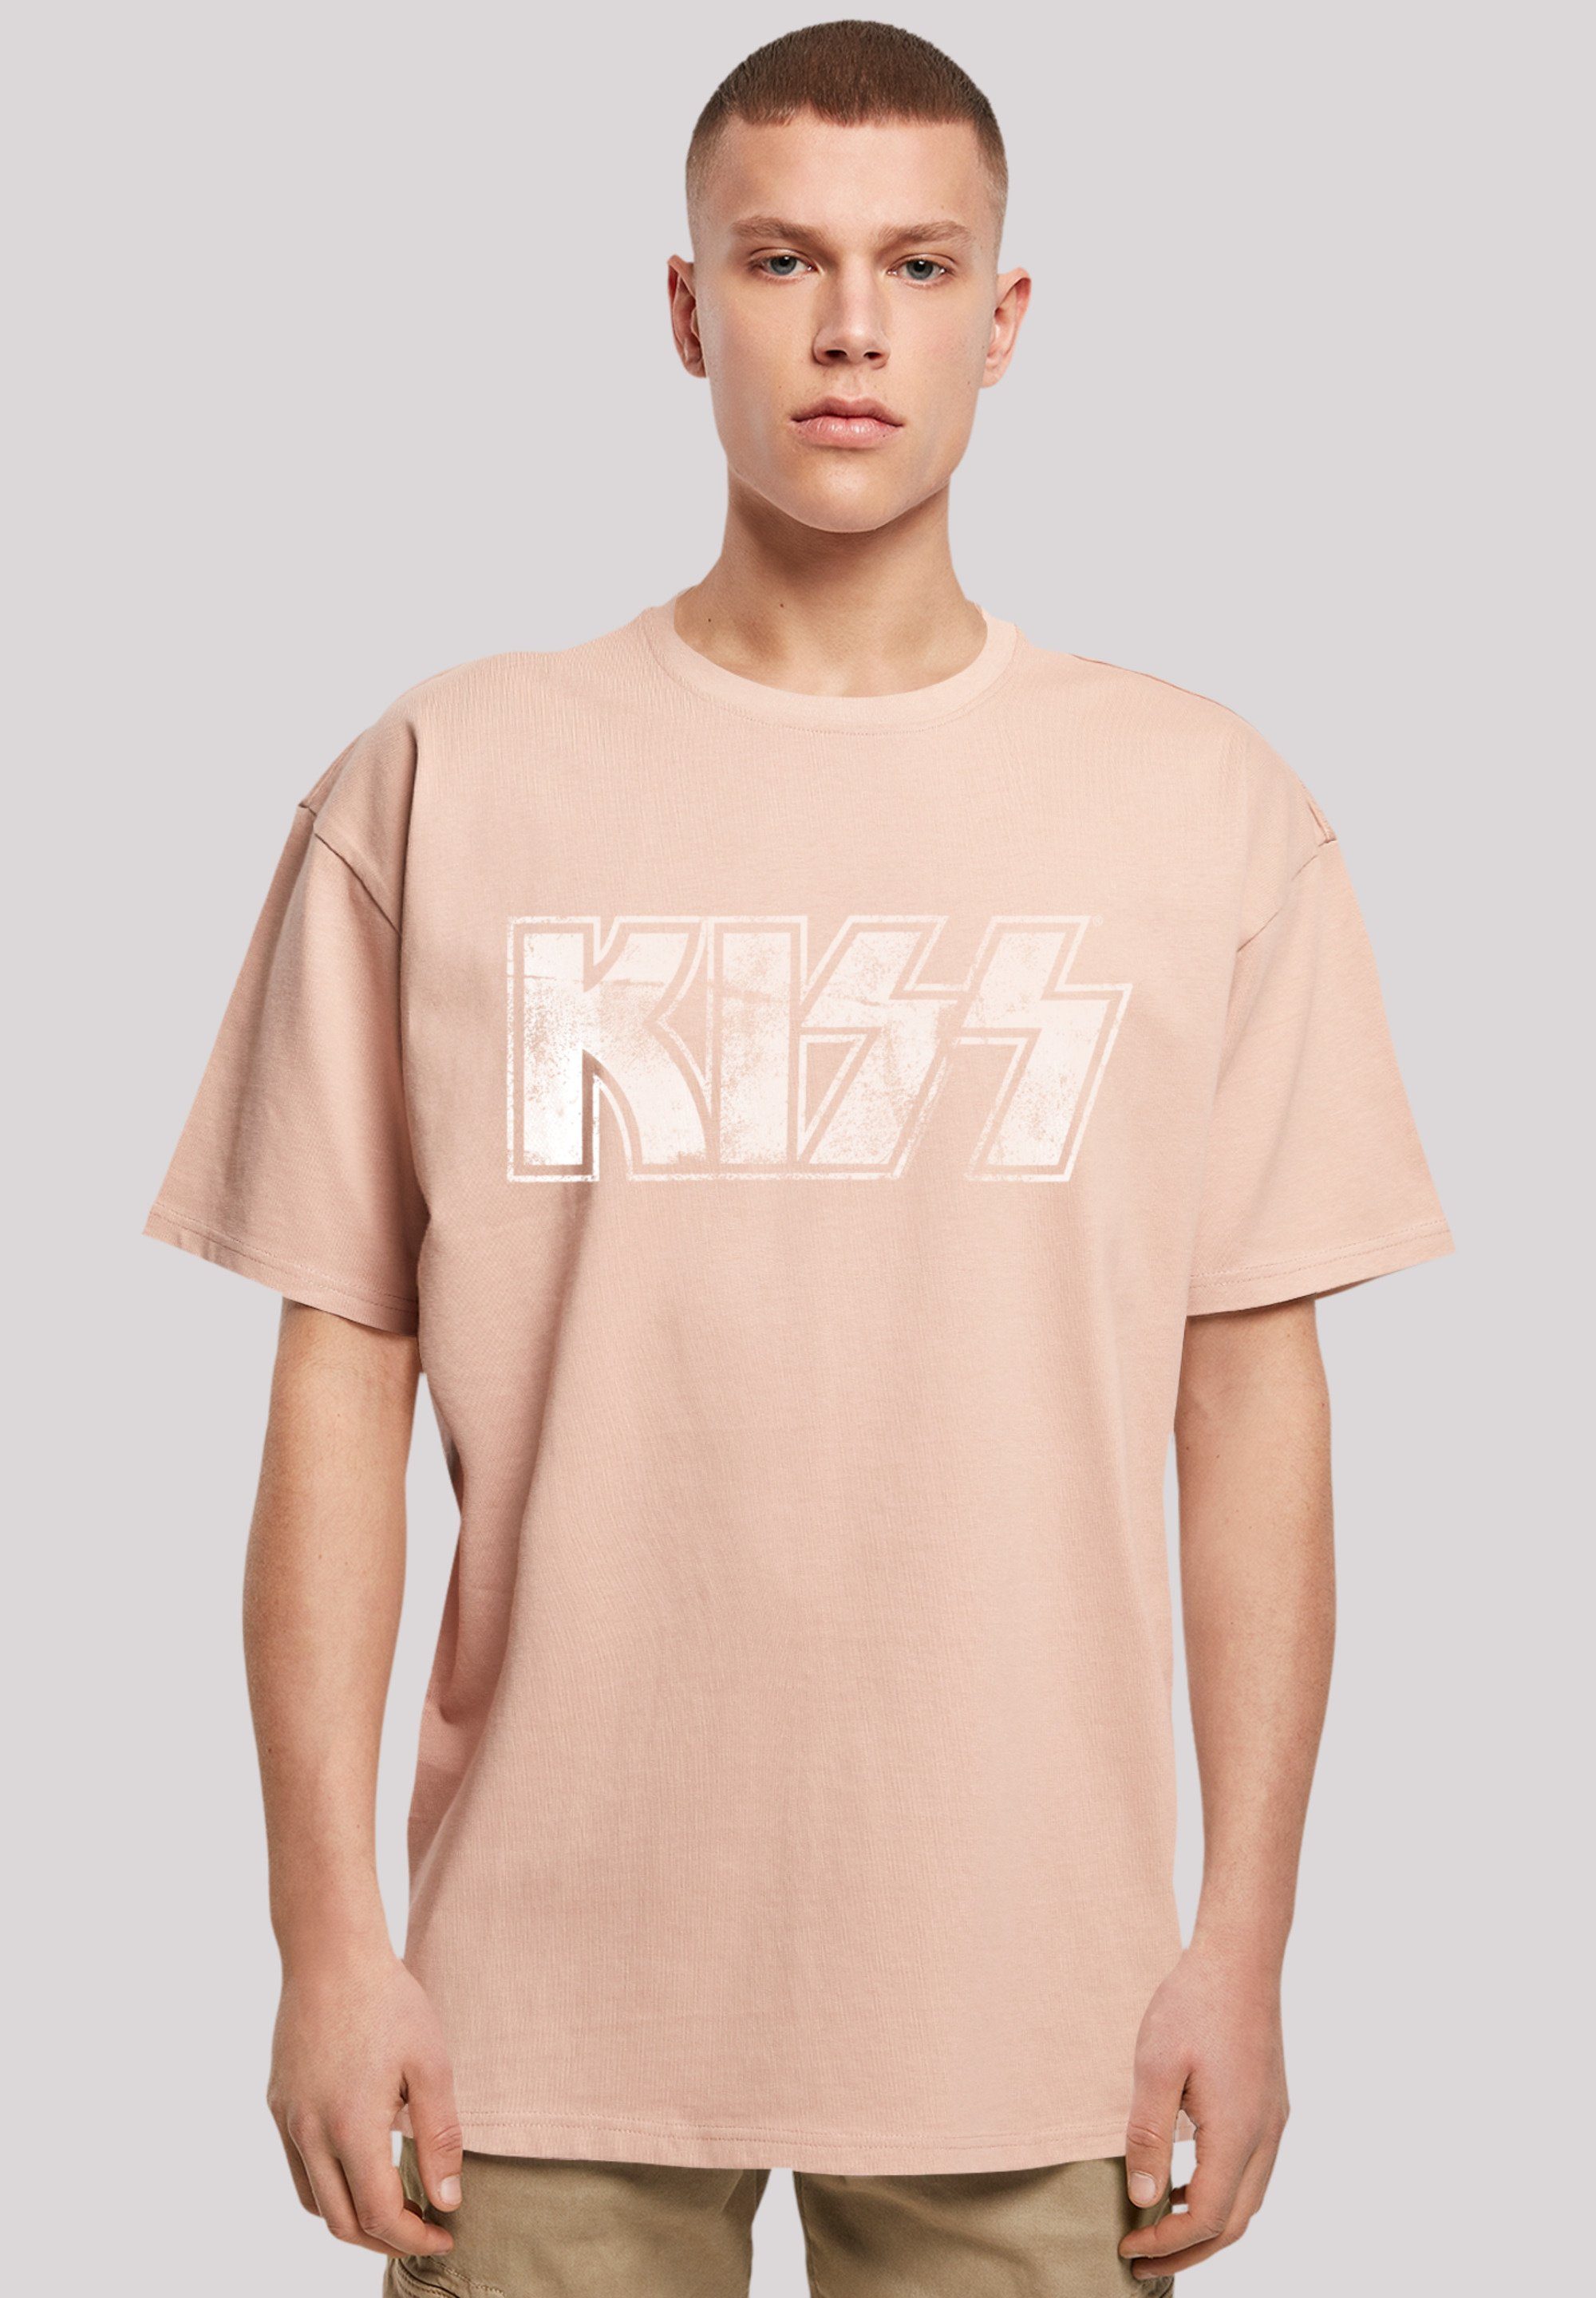 F4NT4STIC T-Shirt Kiss Rock Band Vintage Logo Premium Qualität, Musik, By Rock Off amber